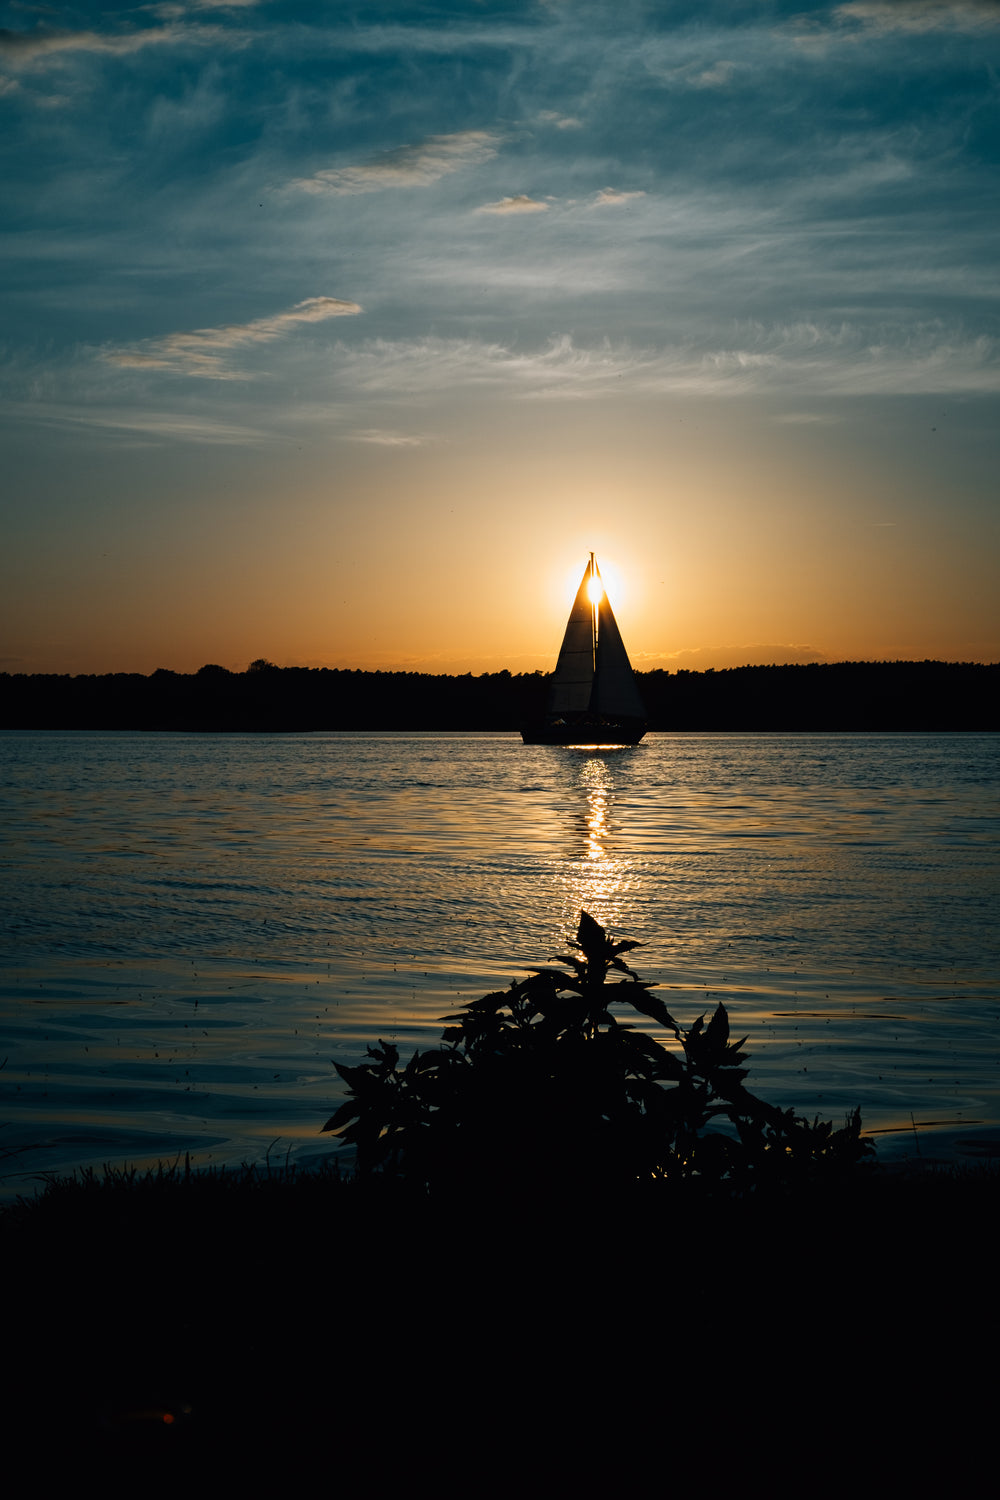 sail boat on quiet lake at sunset